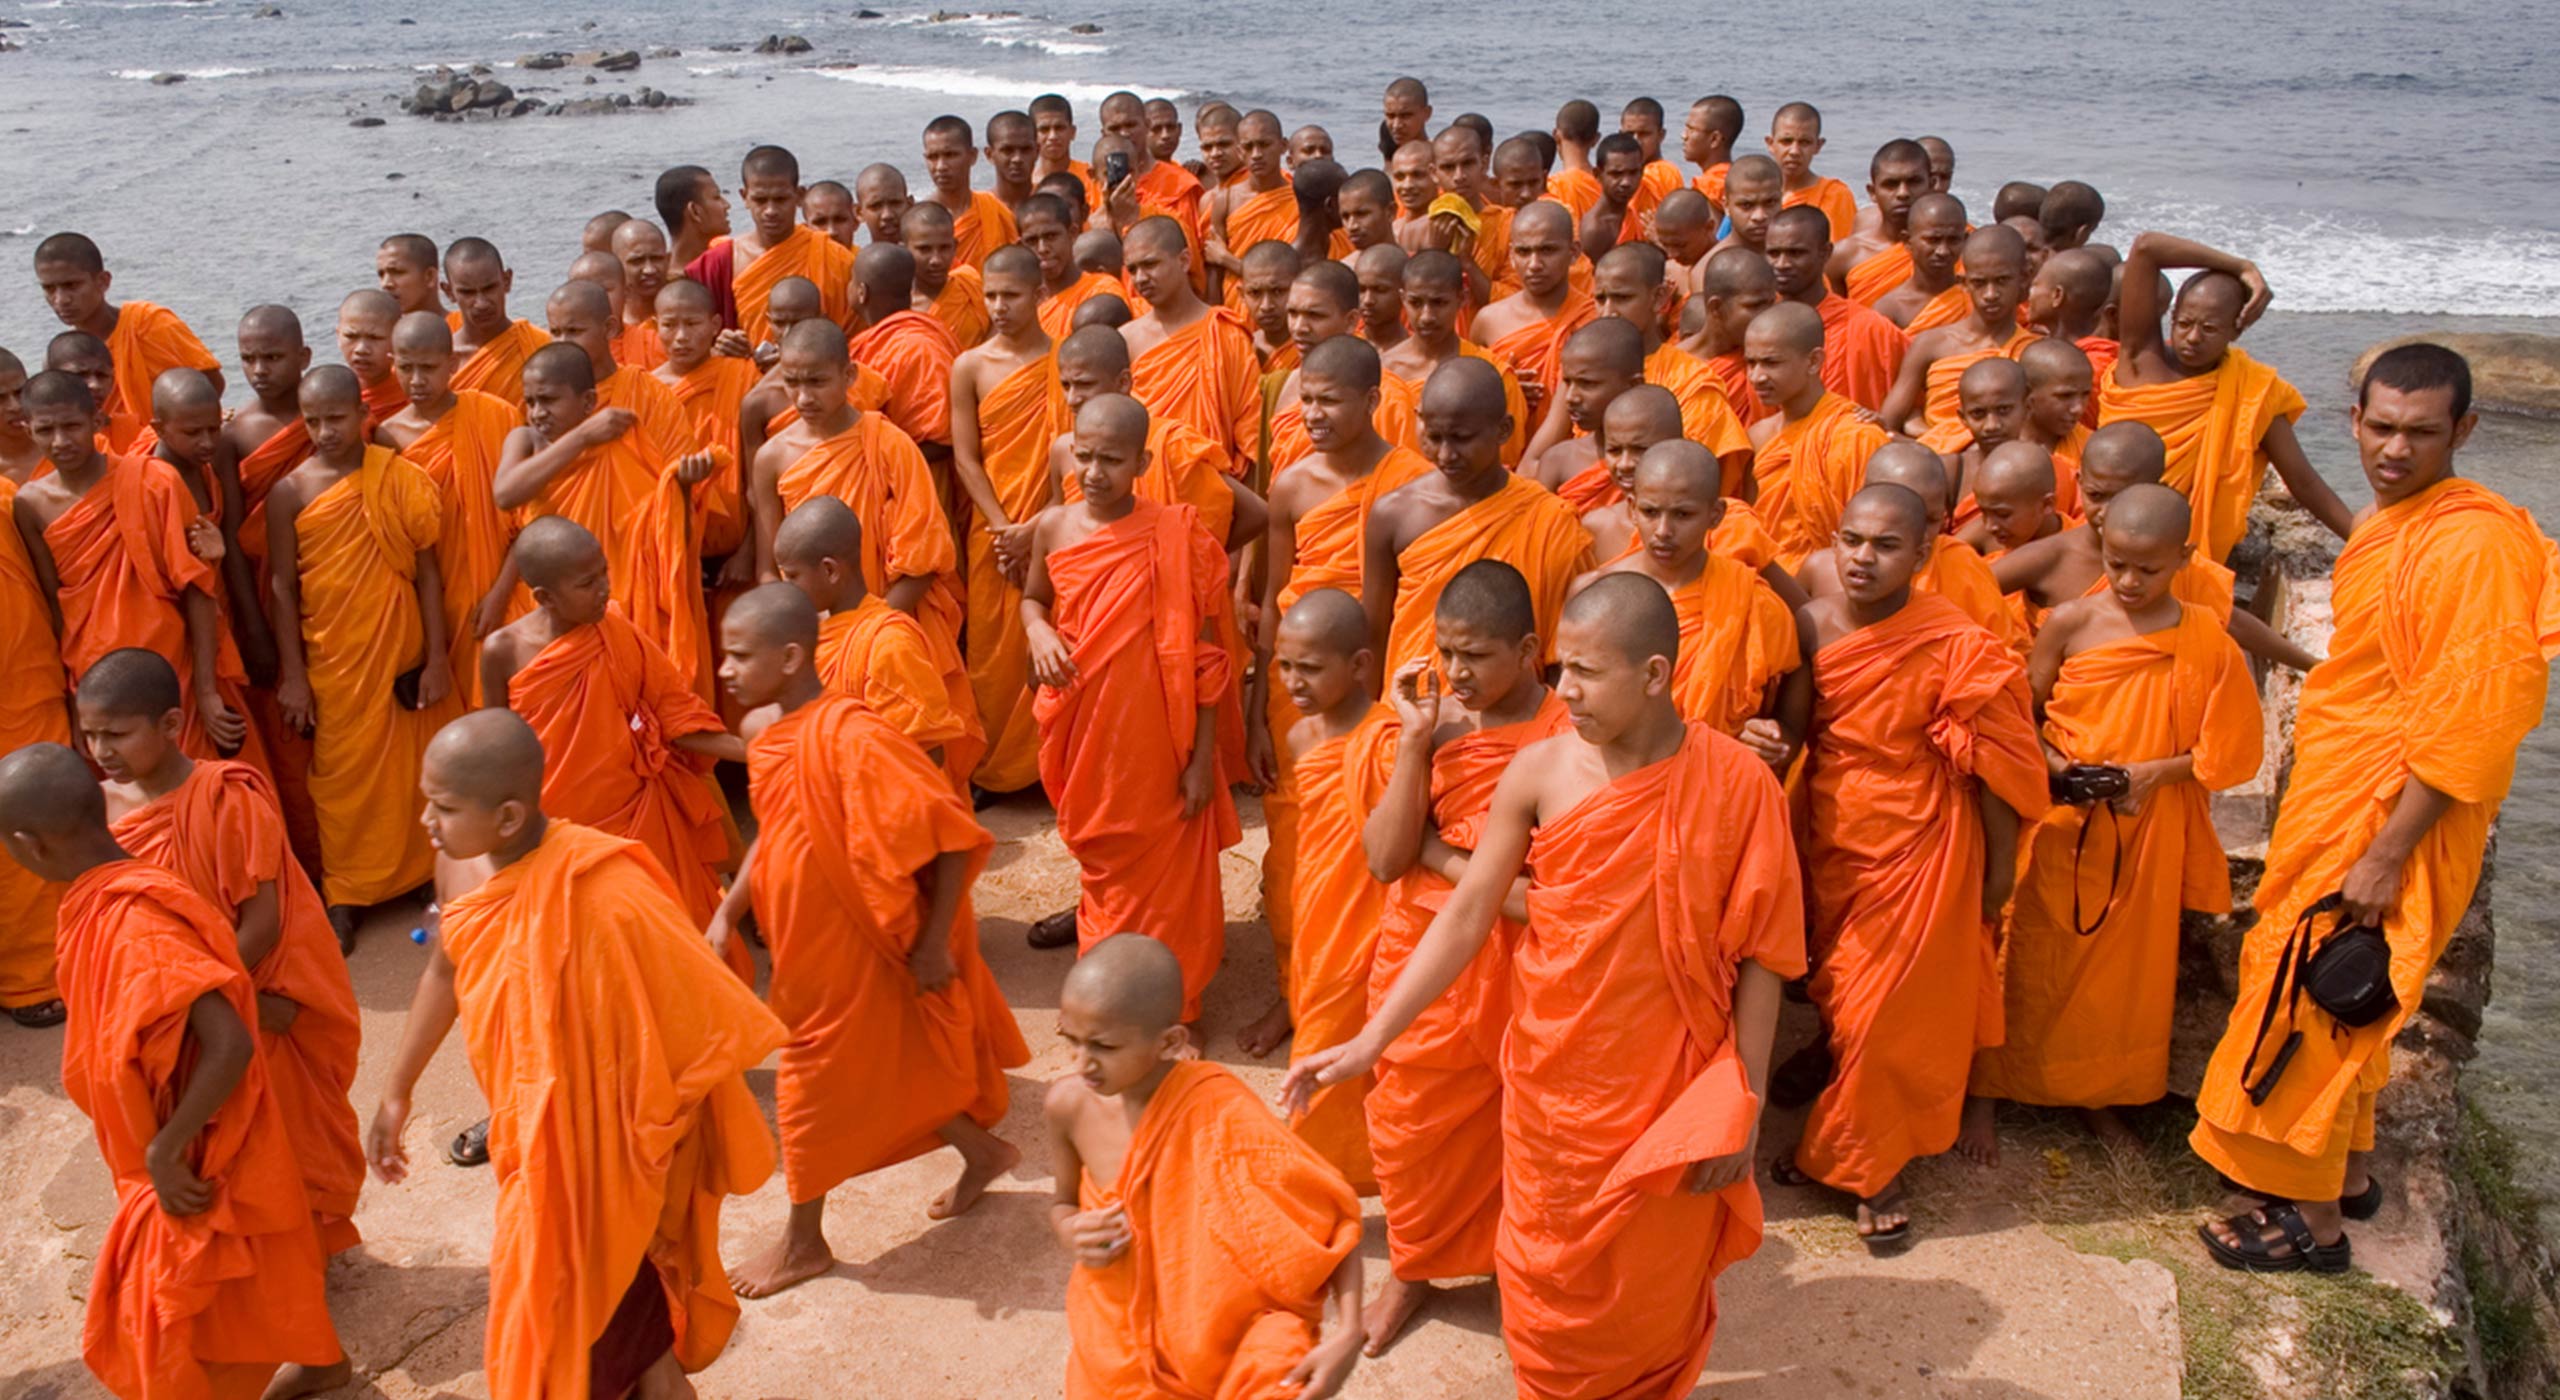 A huge group of monks gathered together